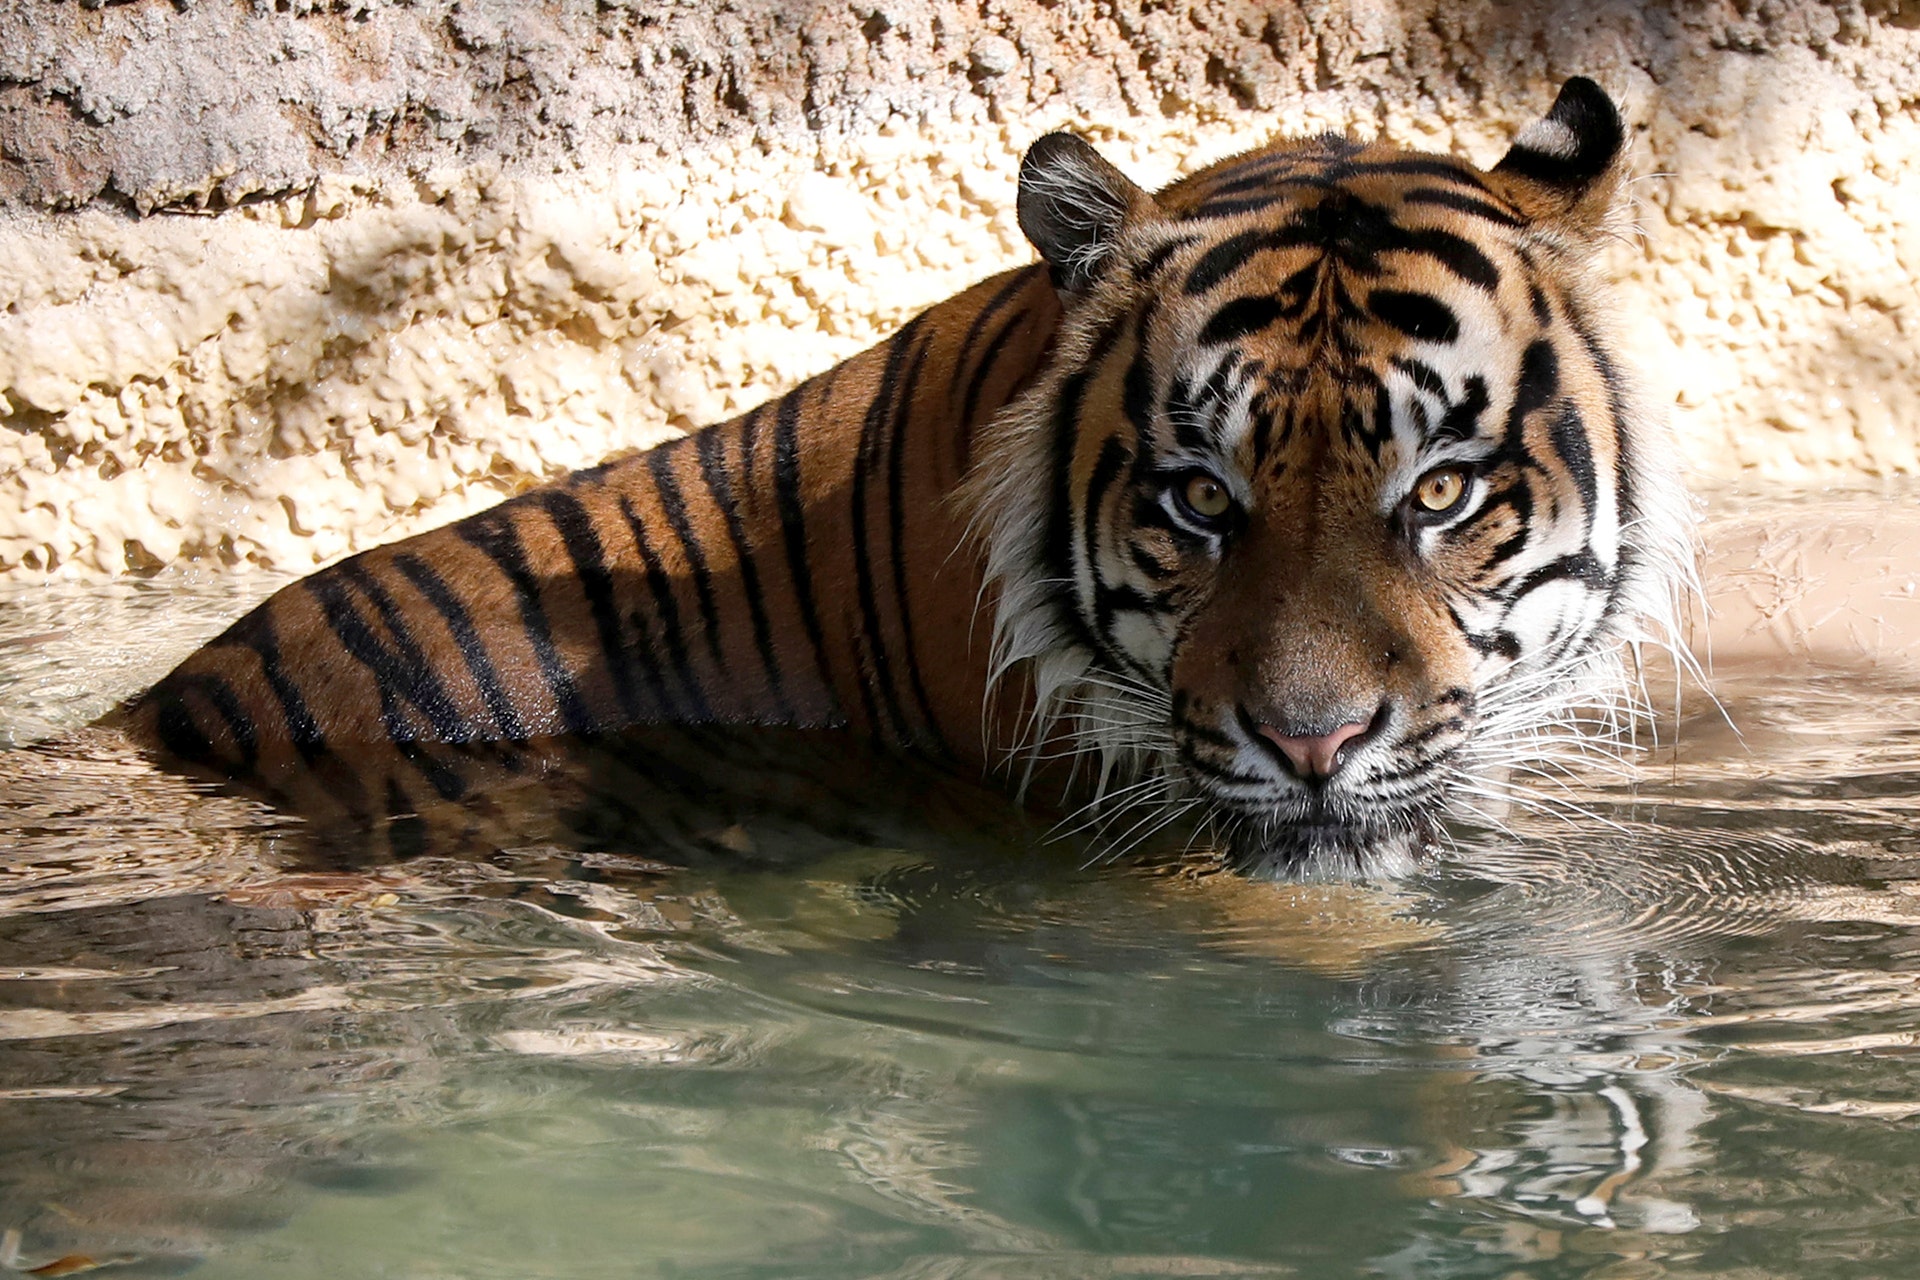 FOX NEWS: Zookeeper recovering after mauling by Sumatran tiger at ...